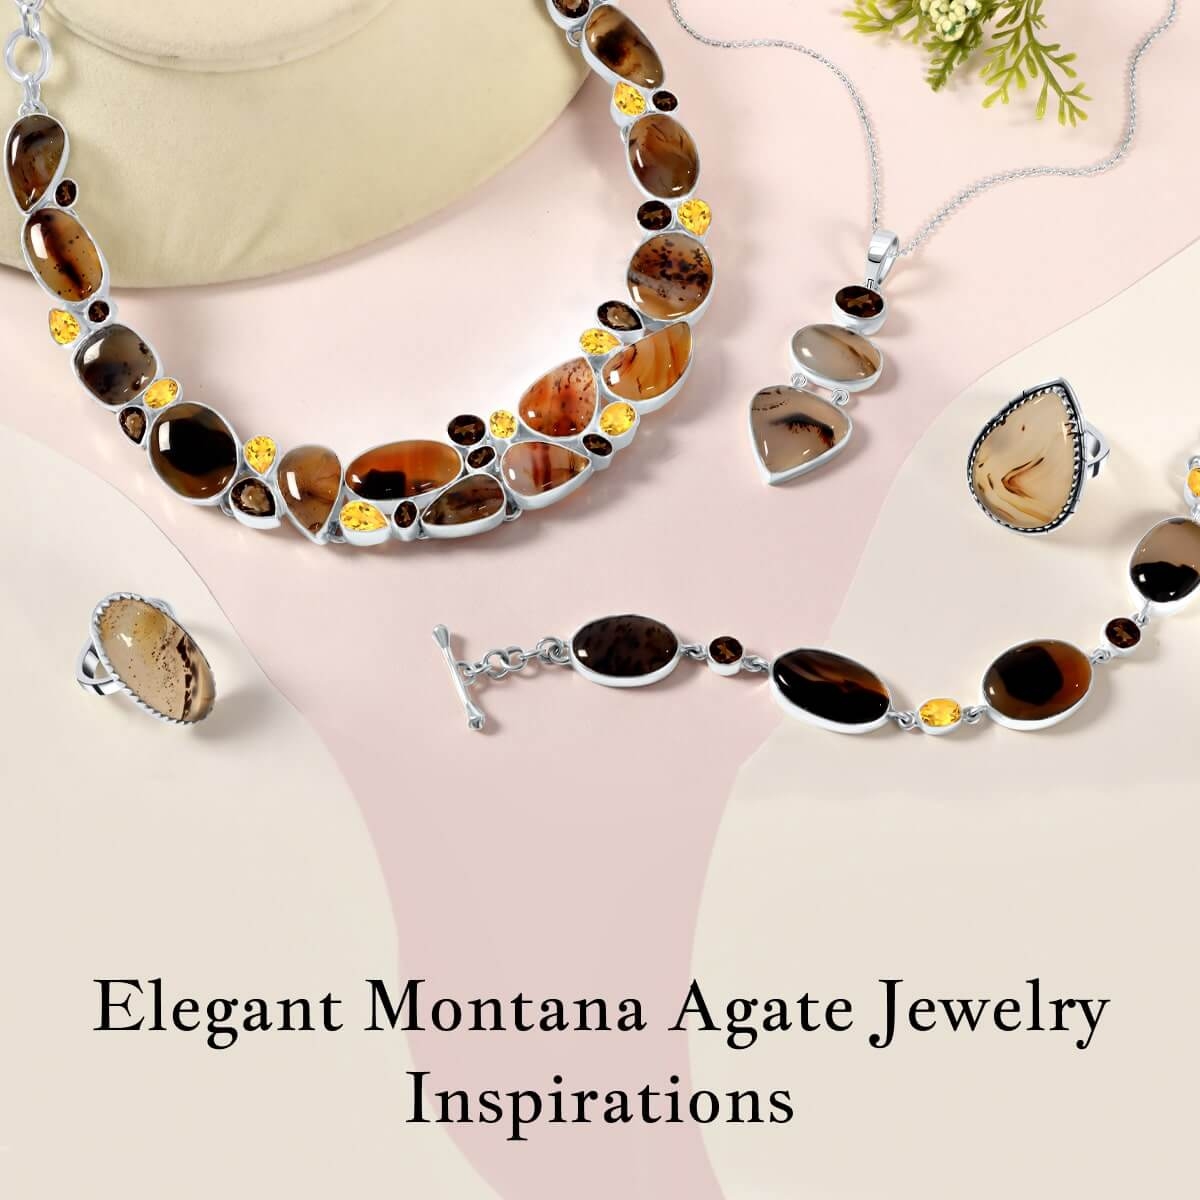 Best jewelry ideas with Montana agate